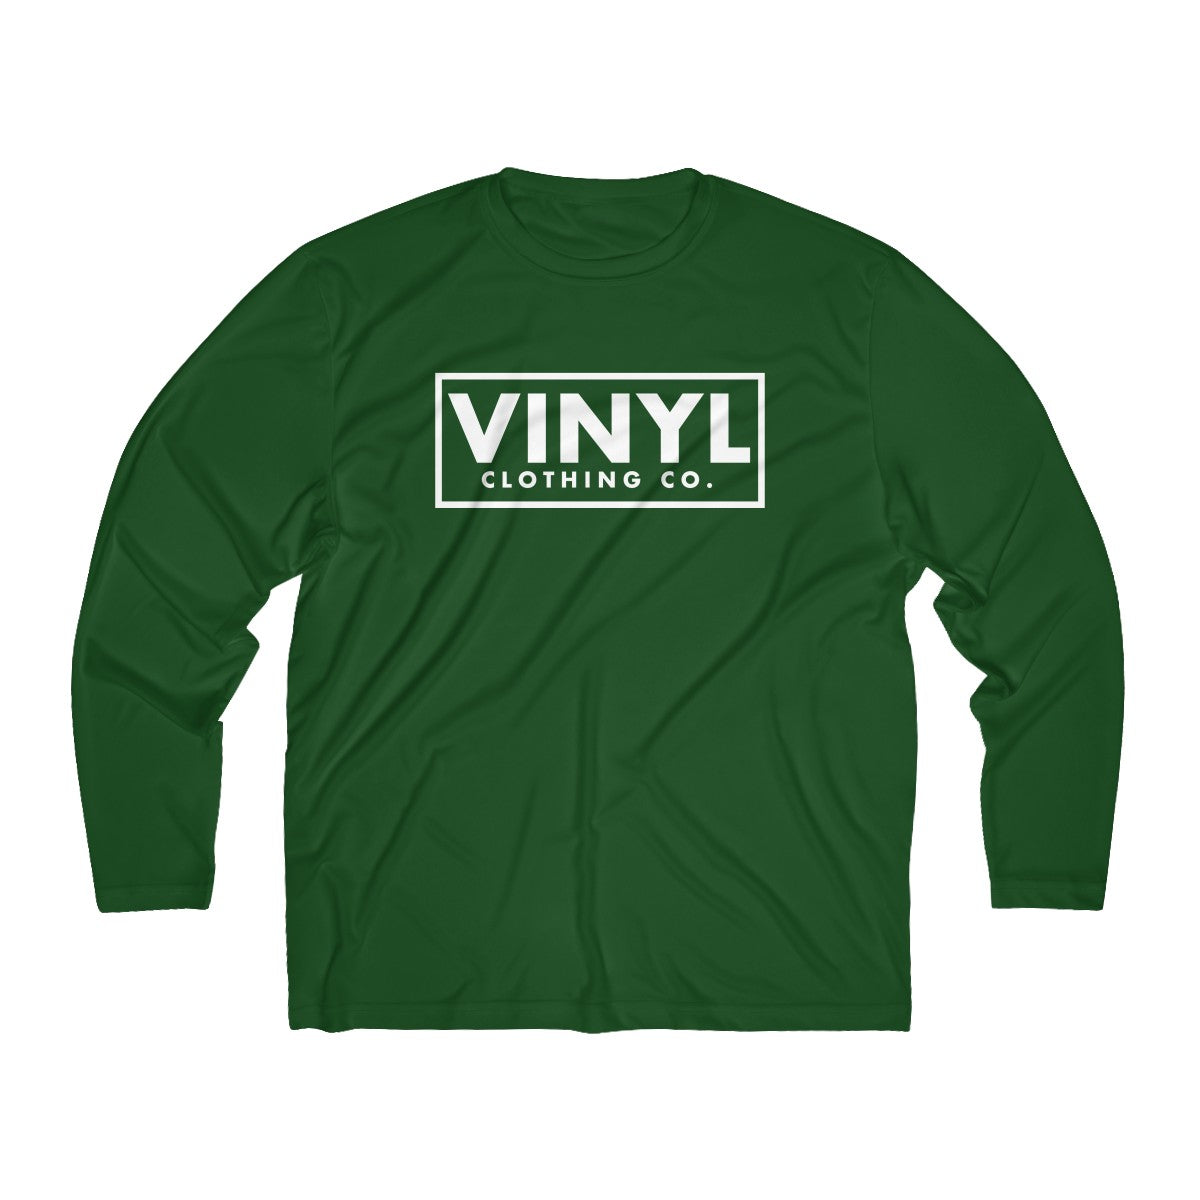 Vinyl Clothing Co. Men's Long Sleeve Moisture Absorbing Tee